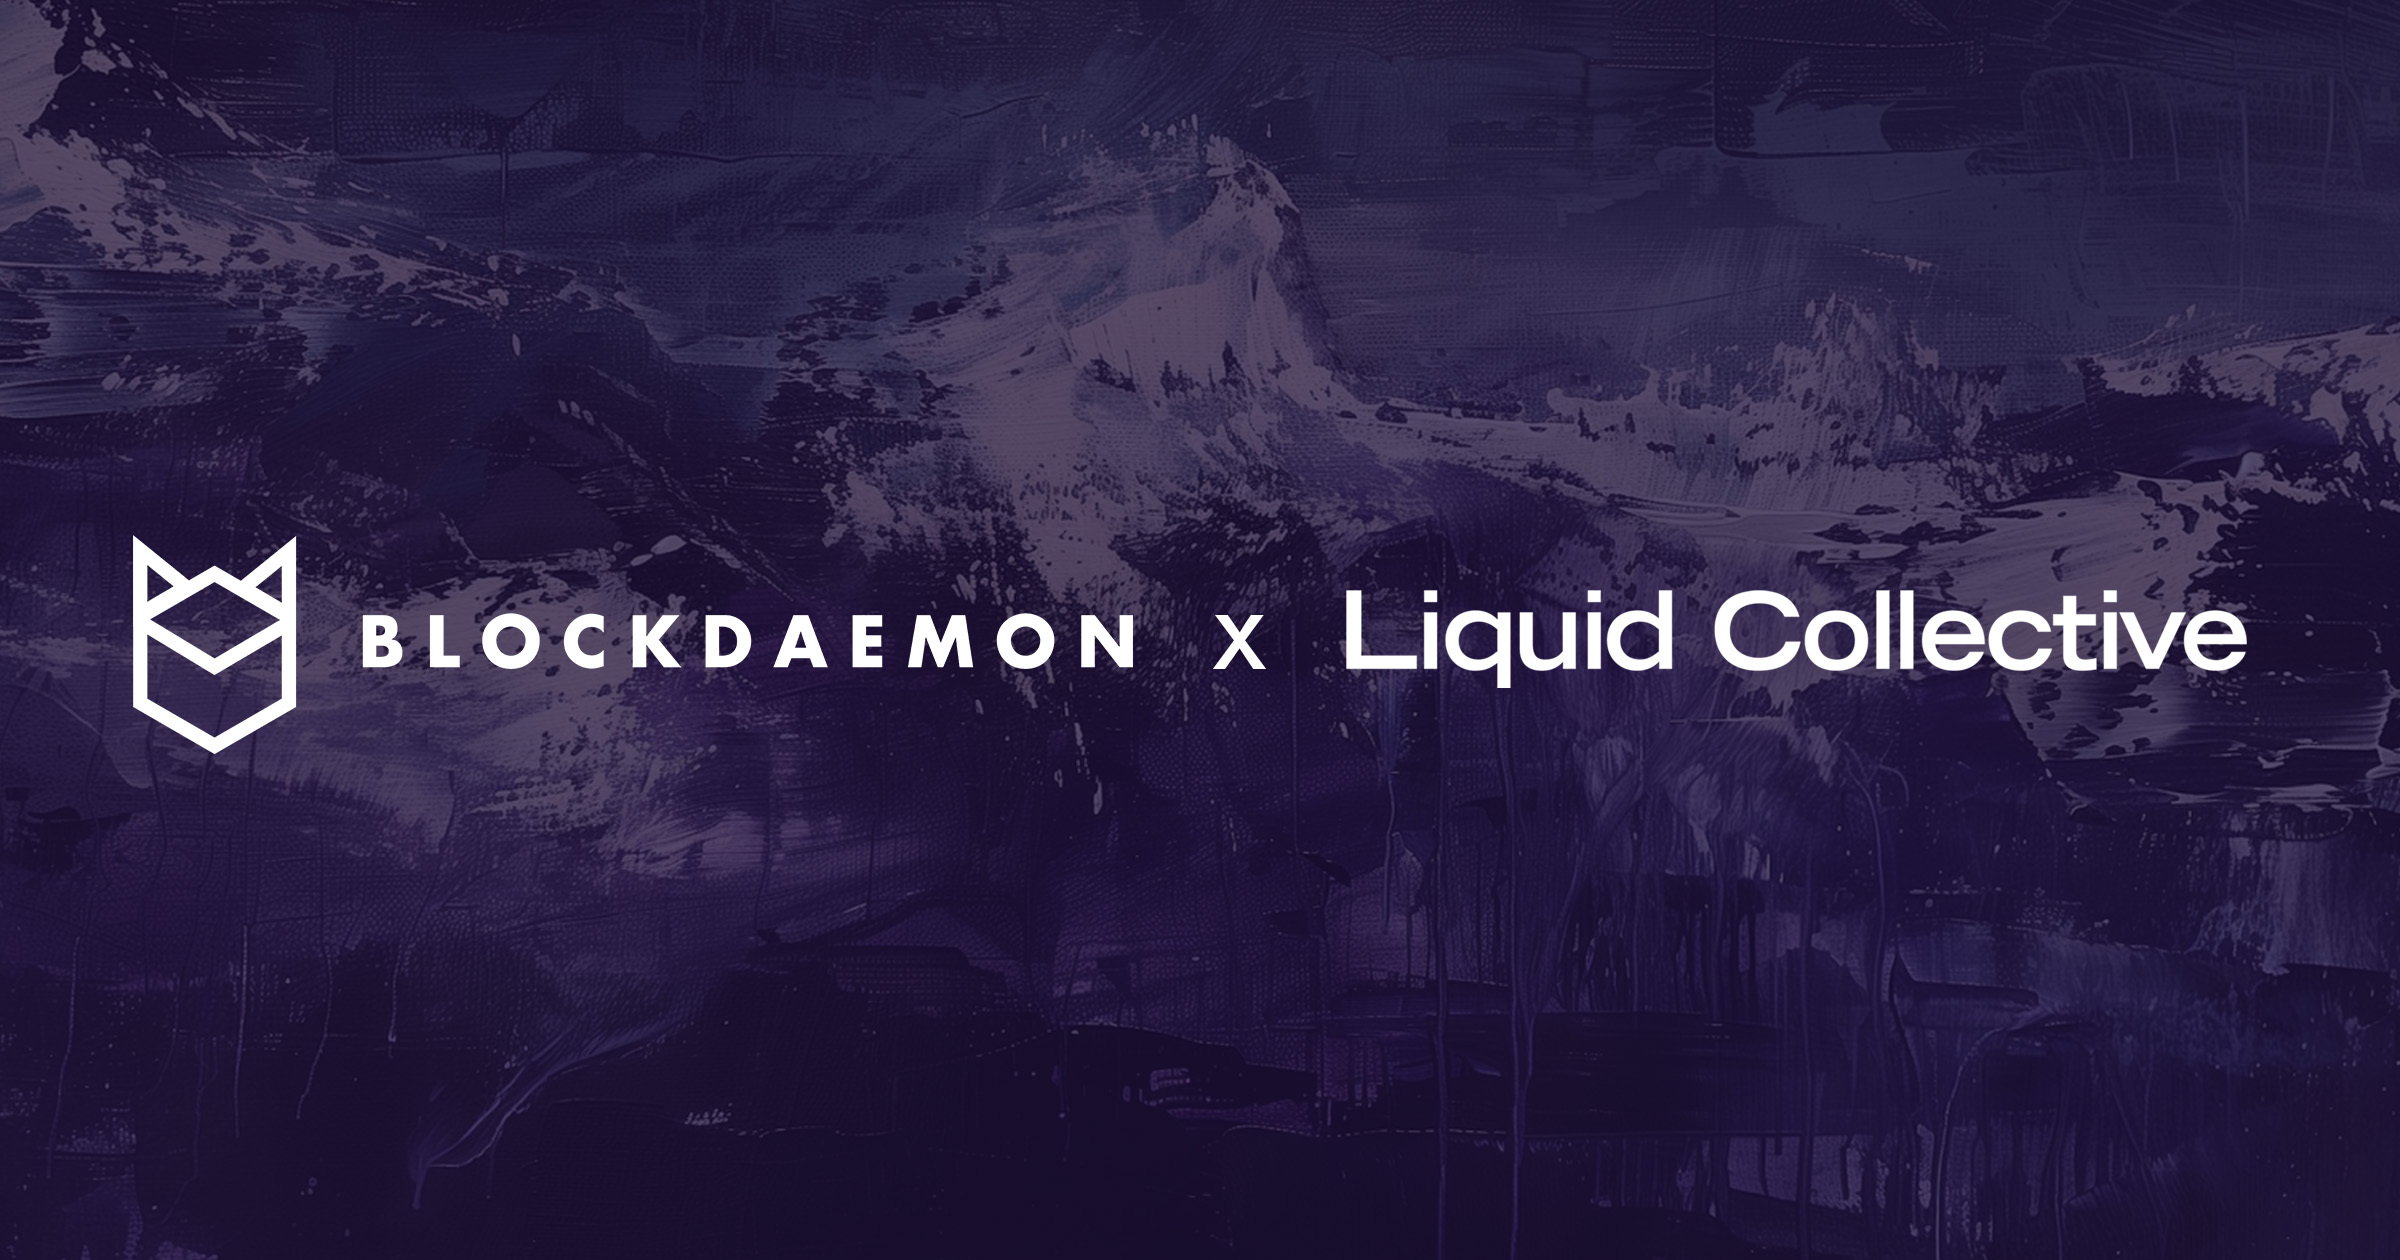 Blockdaemon x Liquid Collective